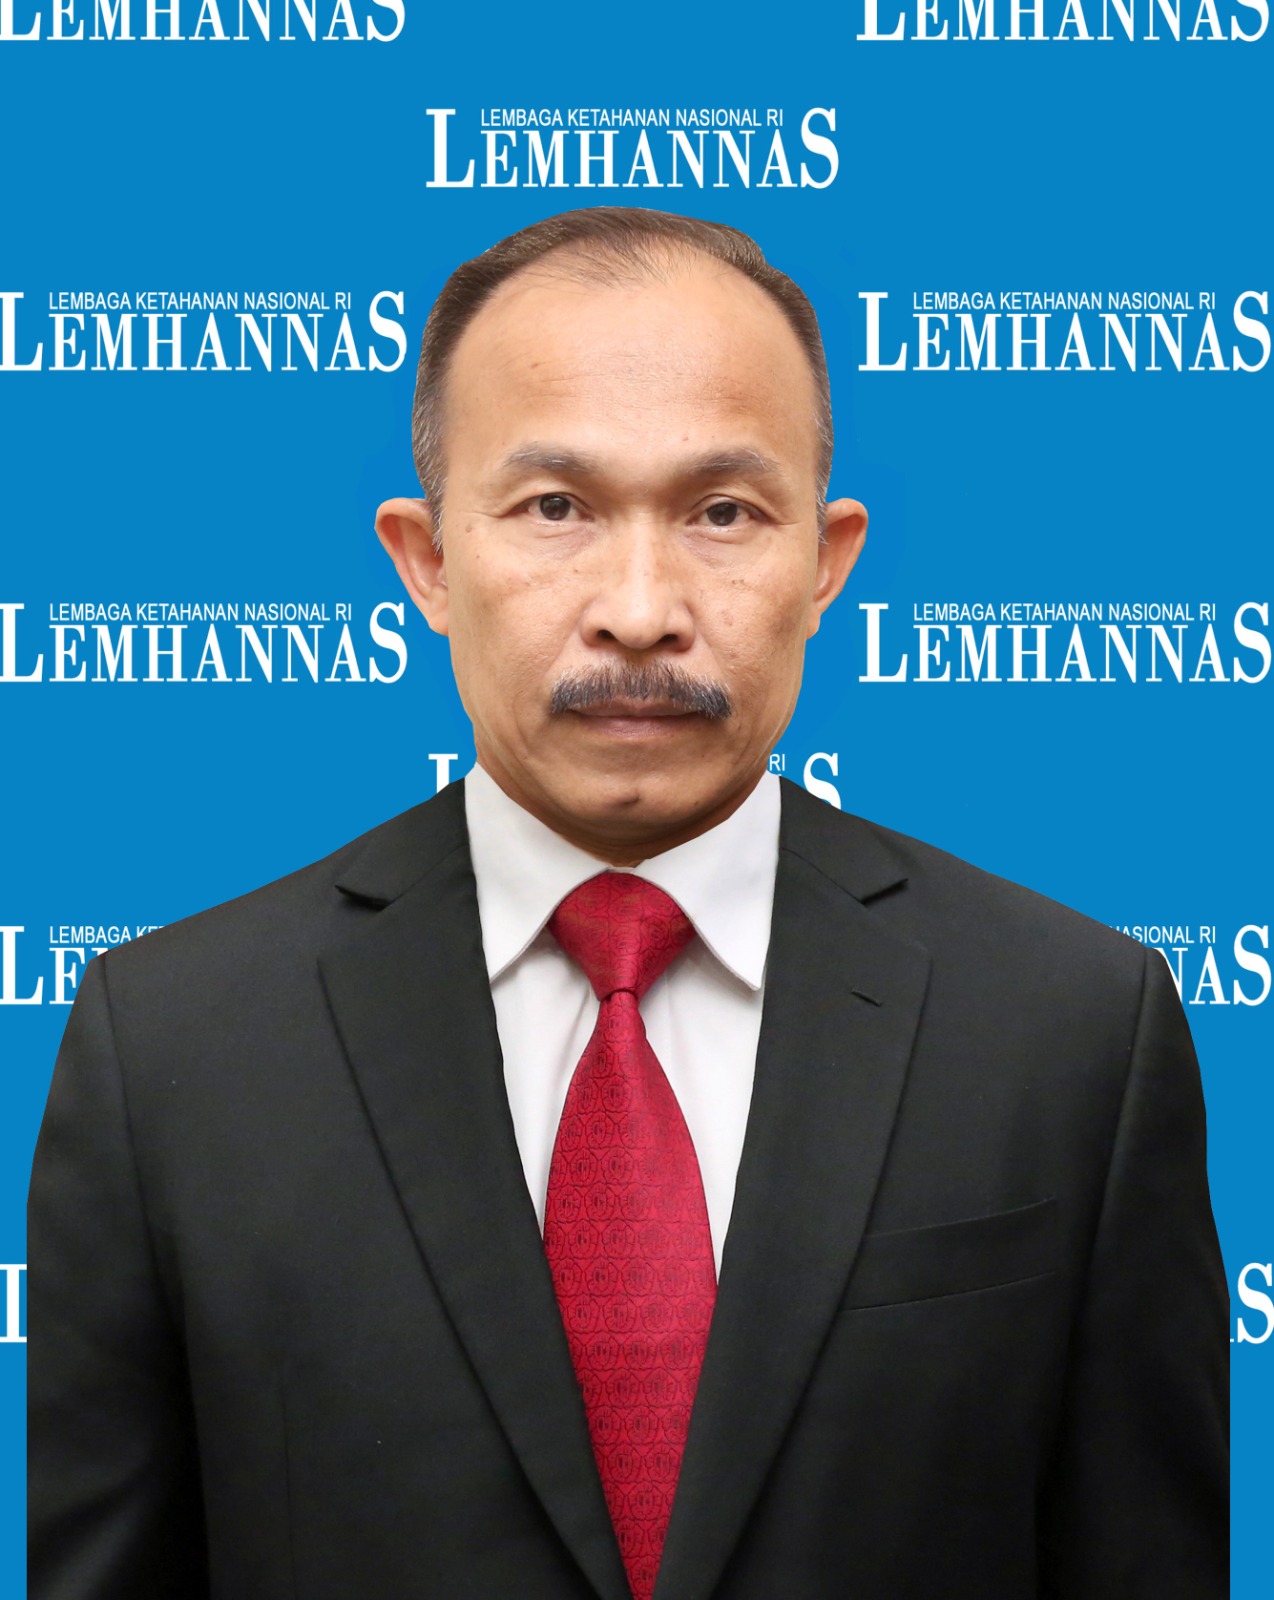 Mayjen TNI (Purn) Achmad Yuliarto, S.Sos., M.A.P.